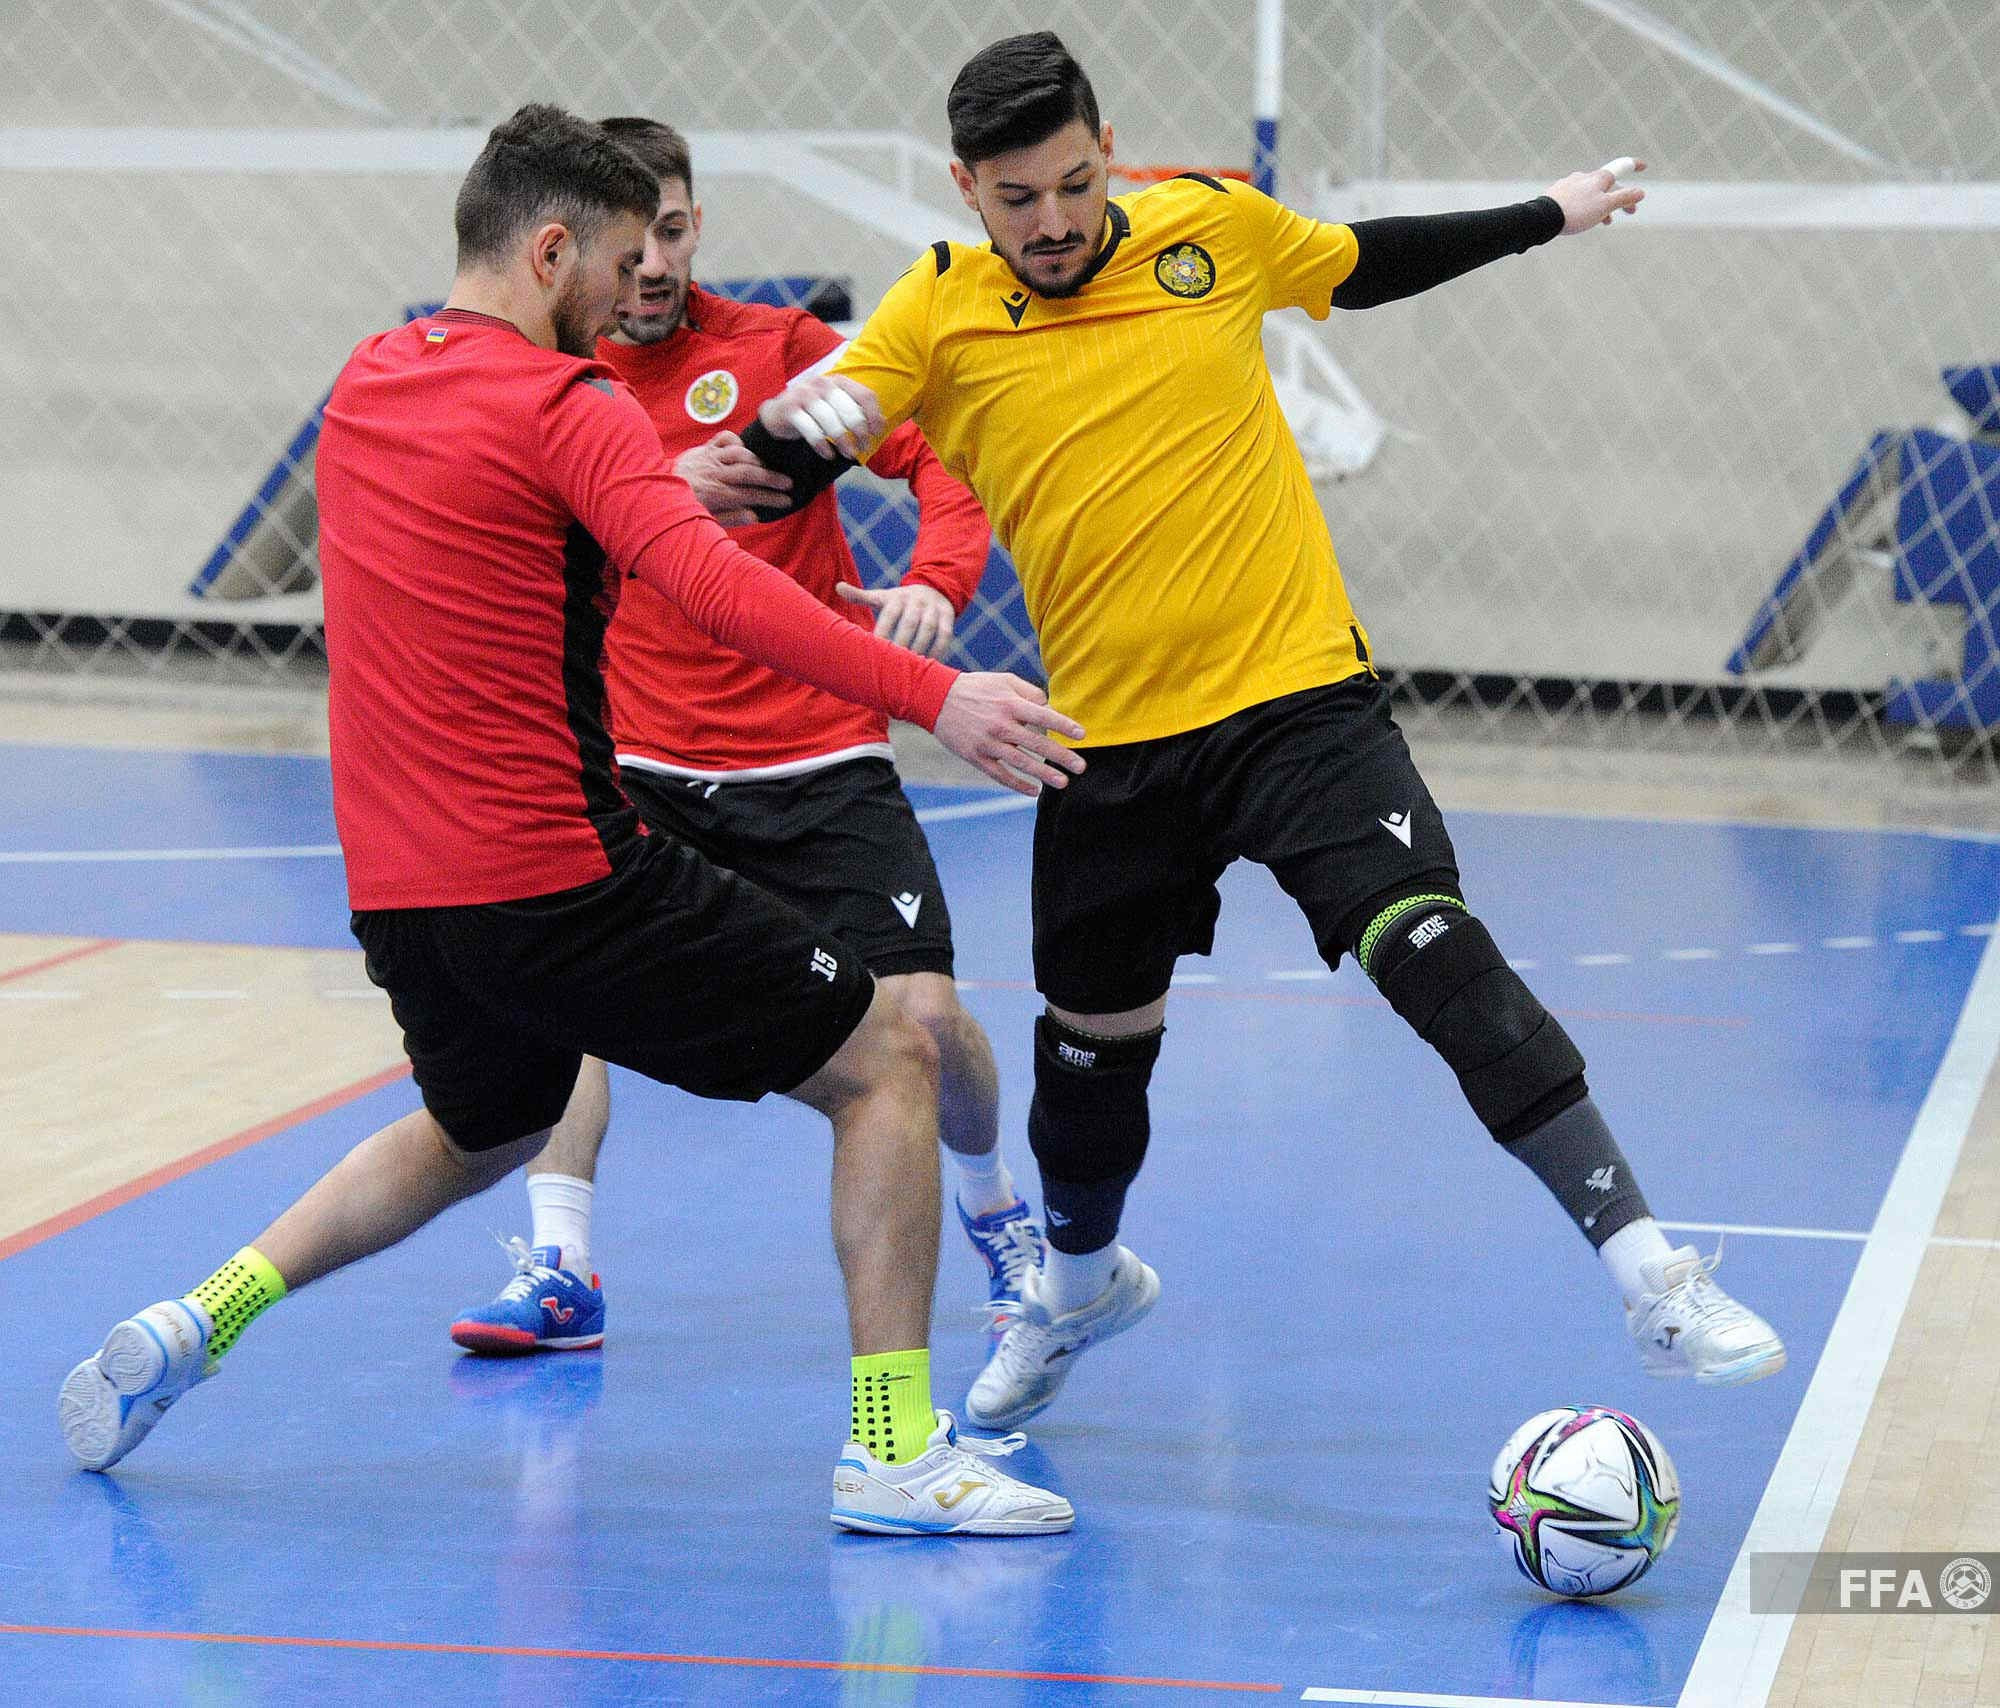 Futsal Armenian national team training session